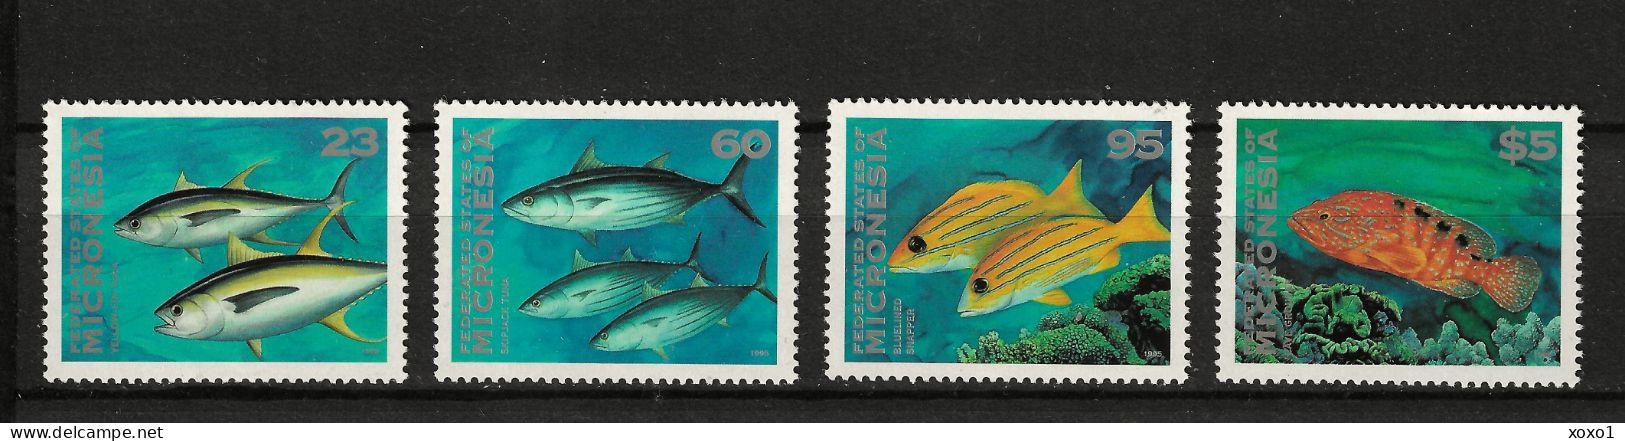 Micronesia 1995 MiNr. 427 - 430 Mikronesien Marine Life Fishes 4v MNH** 16.00 € - Micronesia